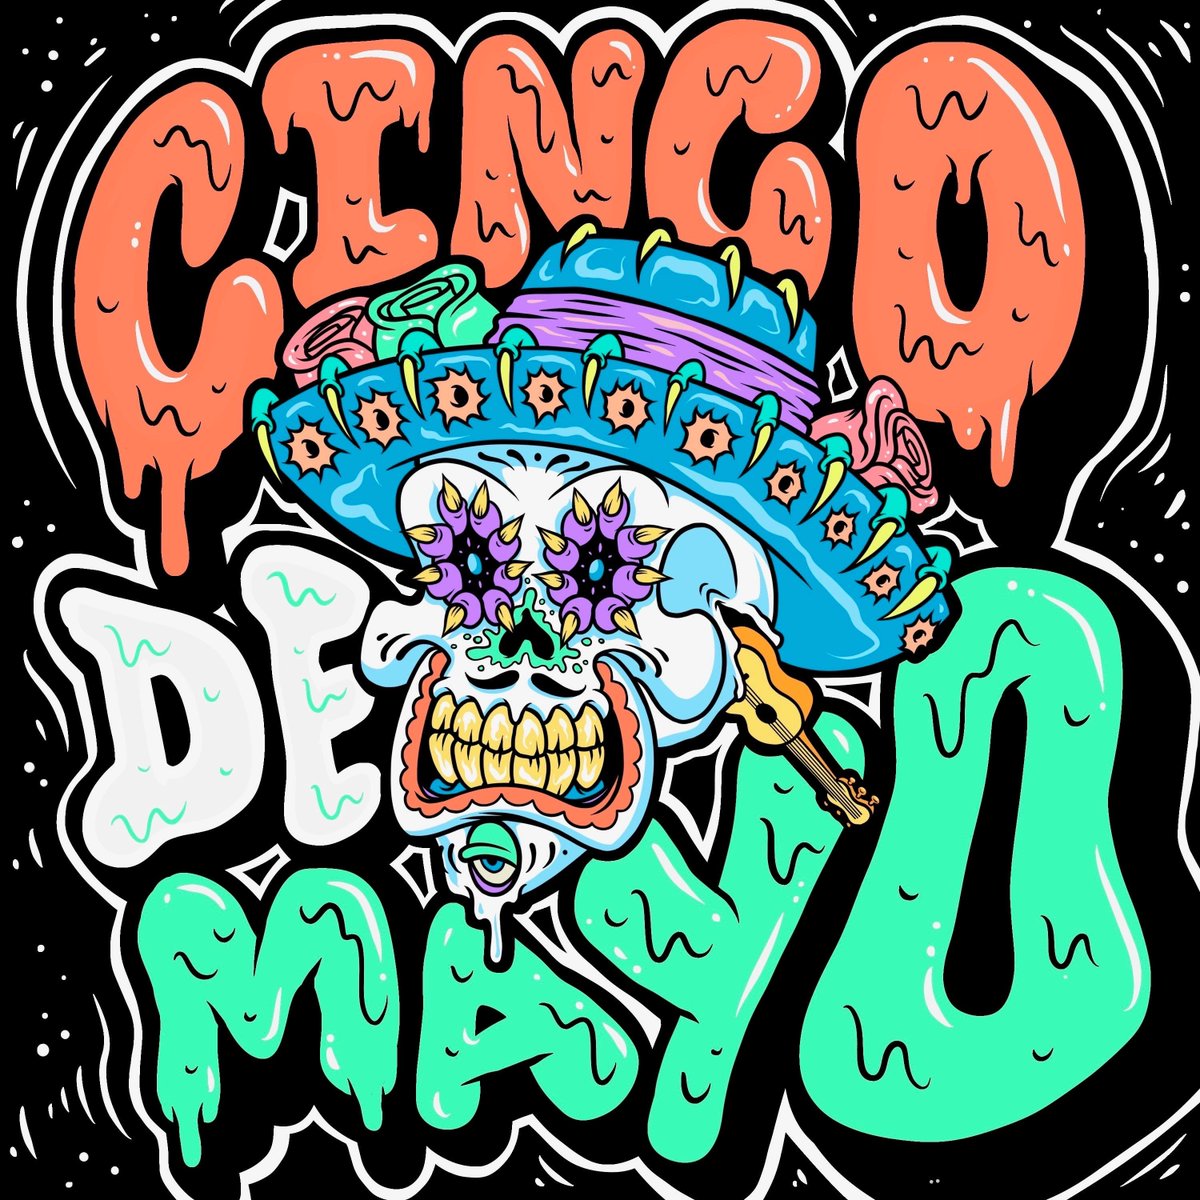 Happy Cinco de Mayo skulls! 🙌💀

#StayToxic #NFT #NFTcommunity